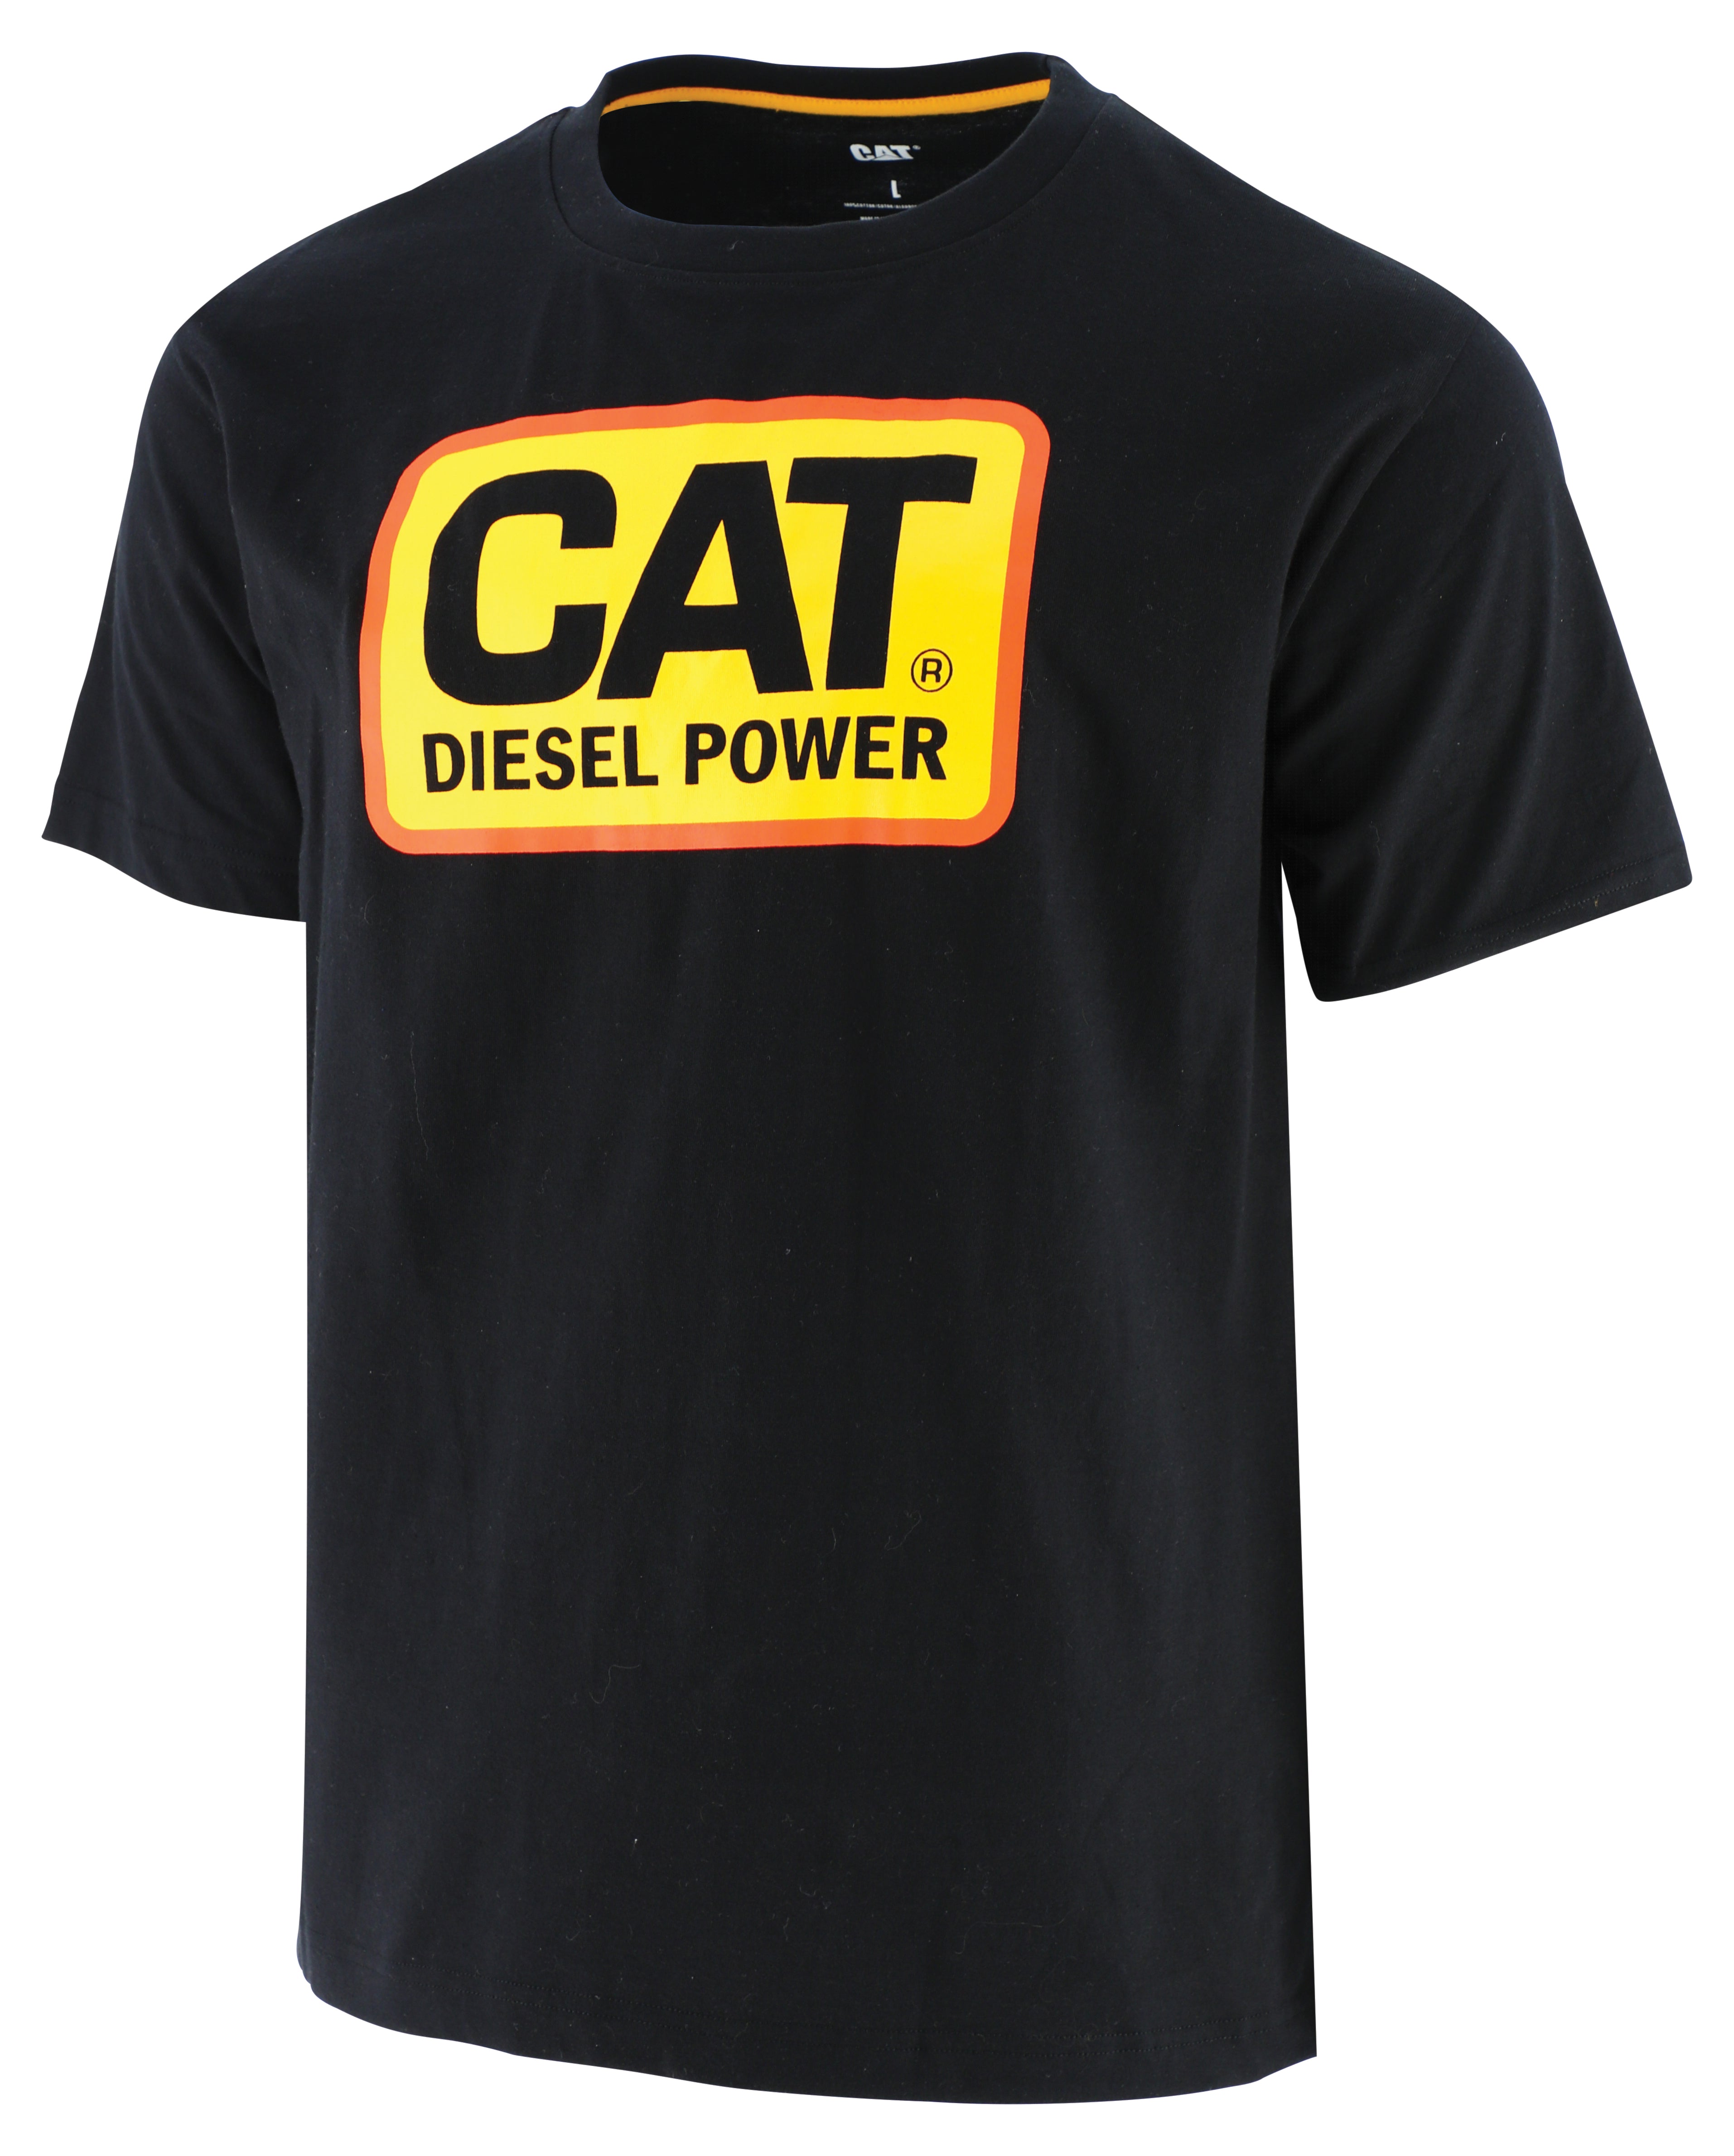 'Caterpillar' Men's Diesel Power Tee - Black / Orange